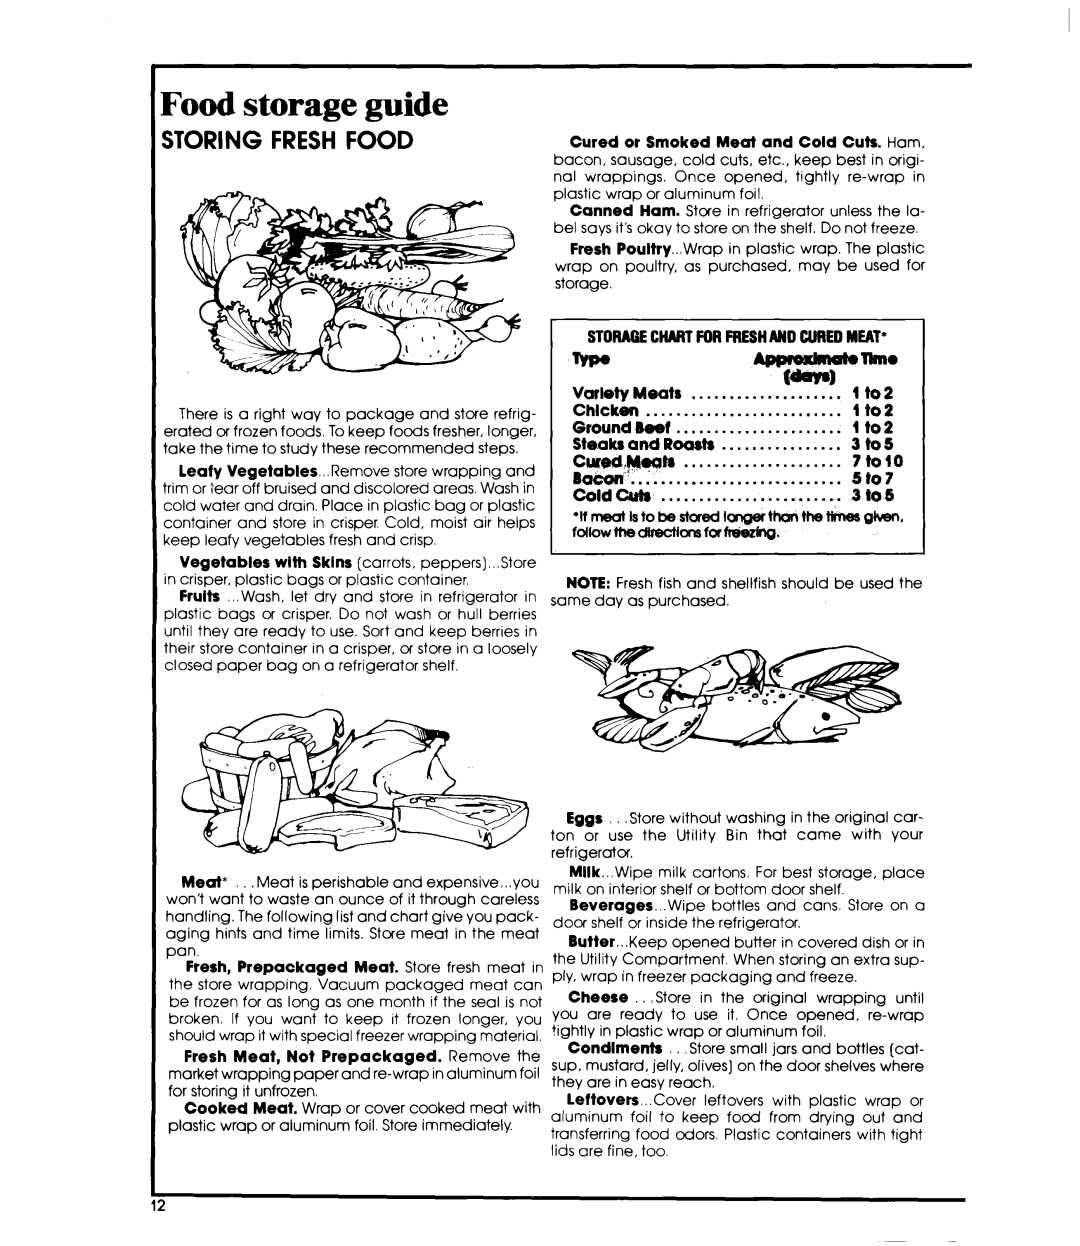 Whirlpool ED25SMIII manual VarietyMeats, Ground beef, 1 to, cz%w&f pqta, k o, CofdCuts, 3toS 